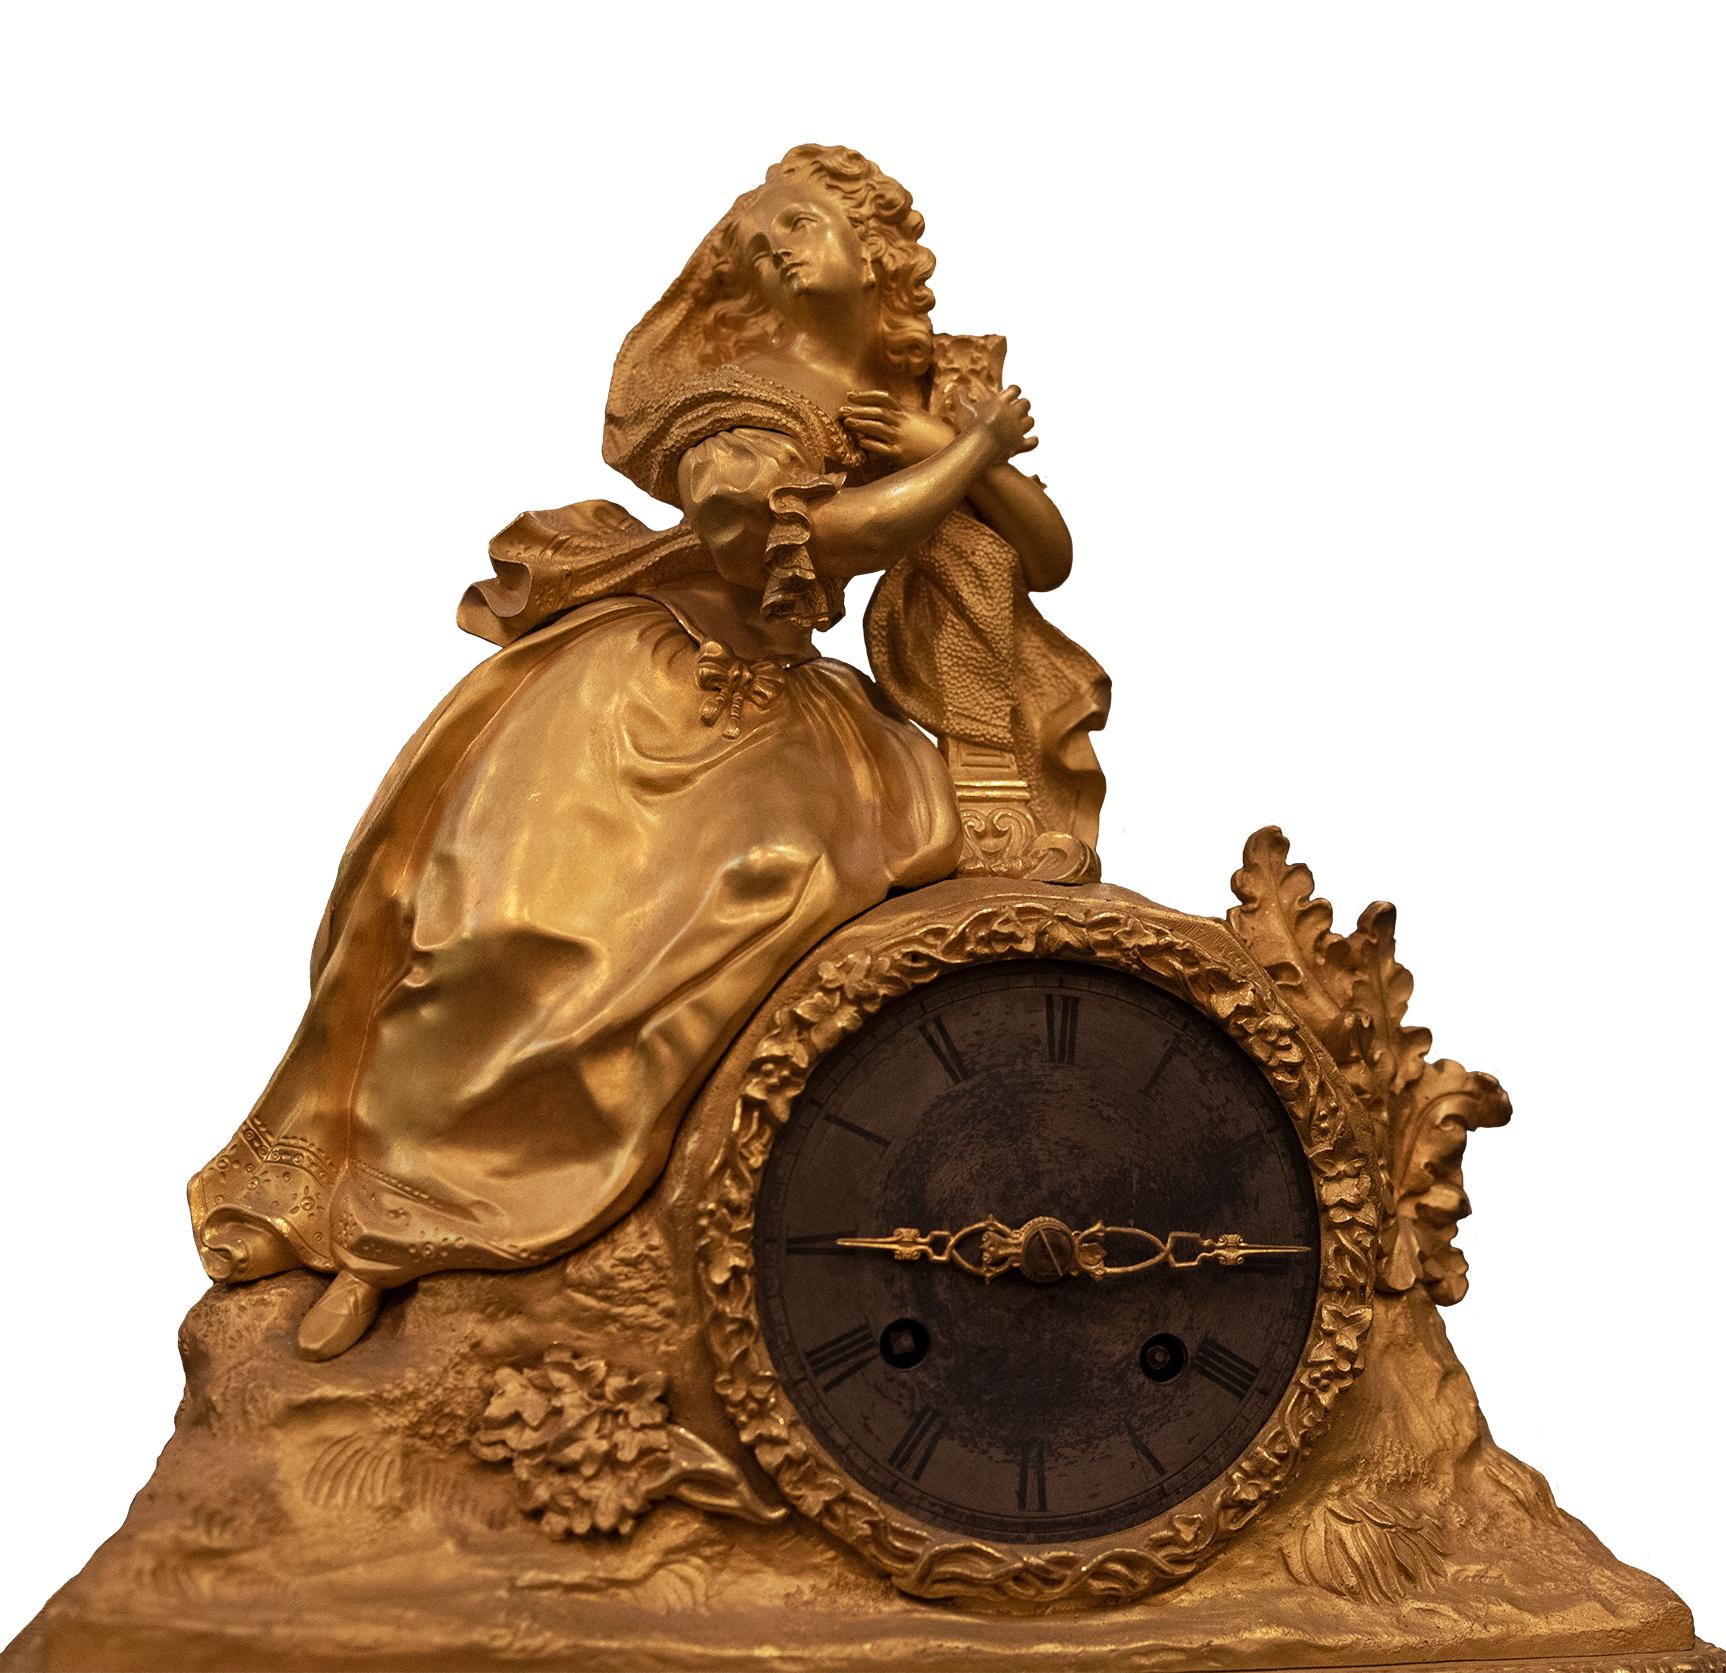 A French clock circa 1880.

Dimensions:

17 x 12 x 5 inches